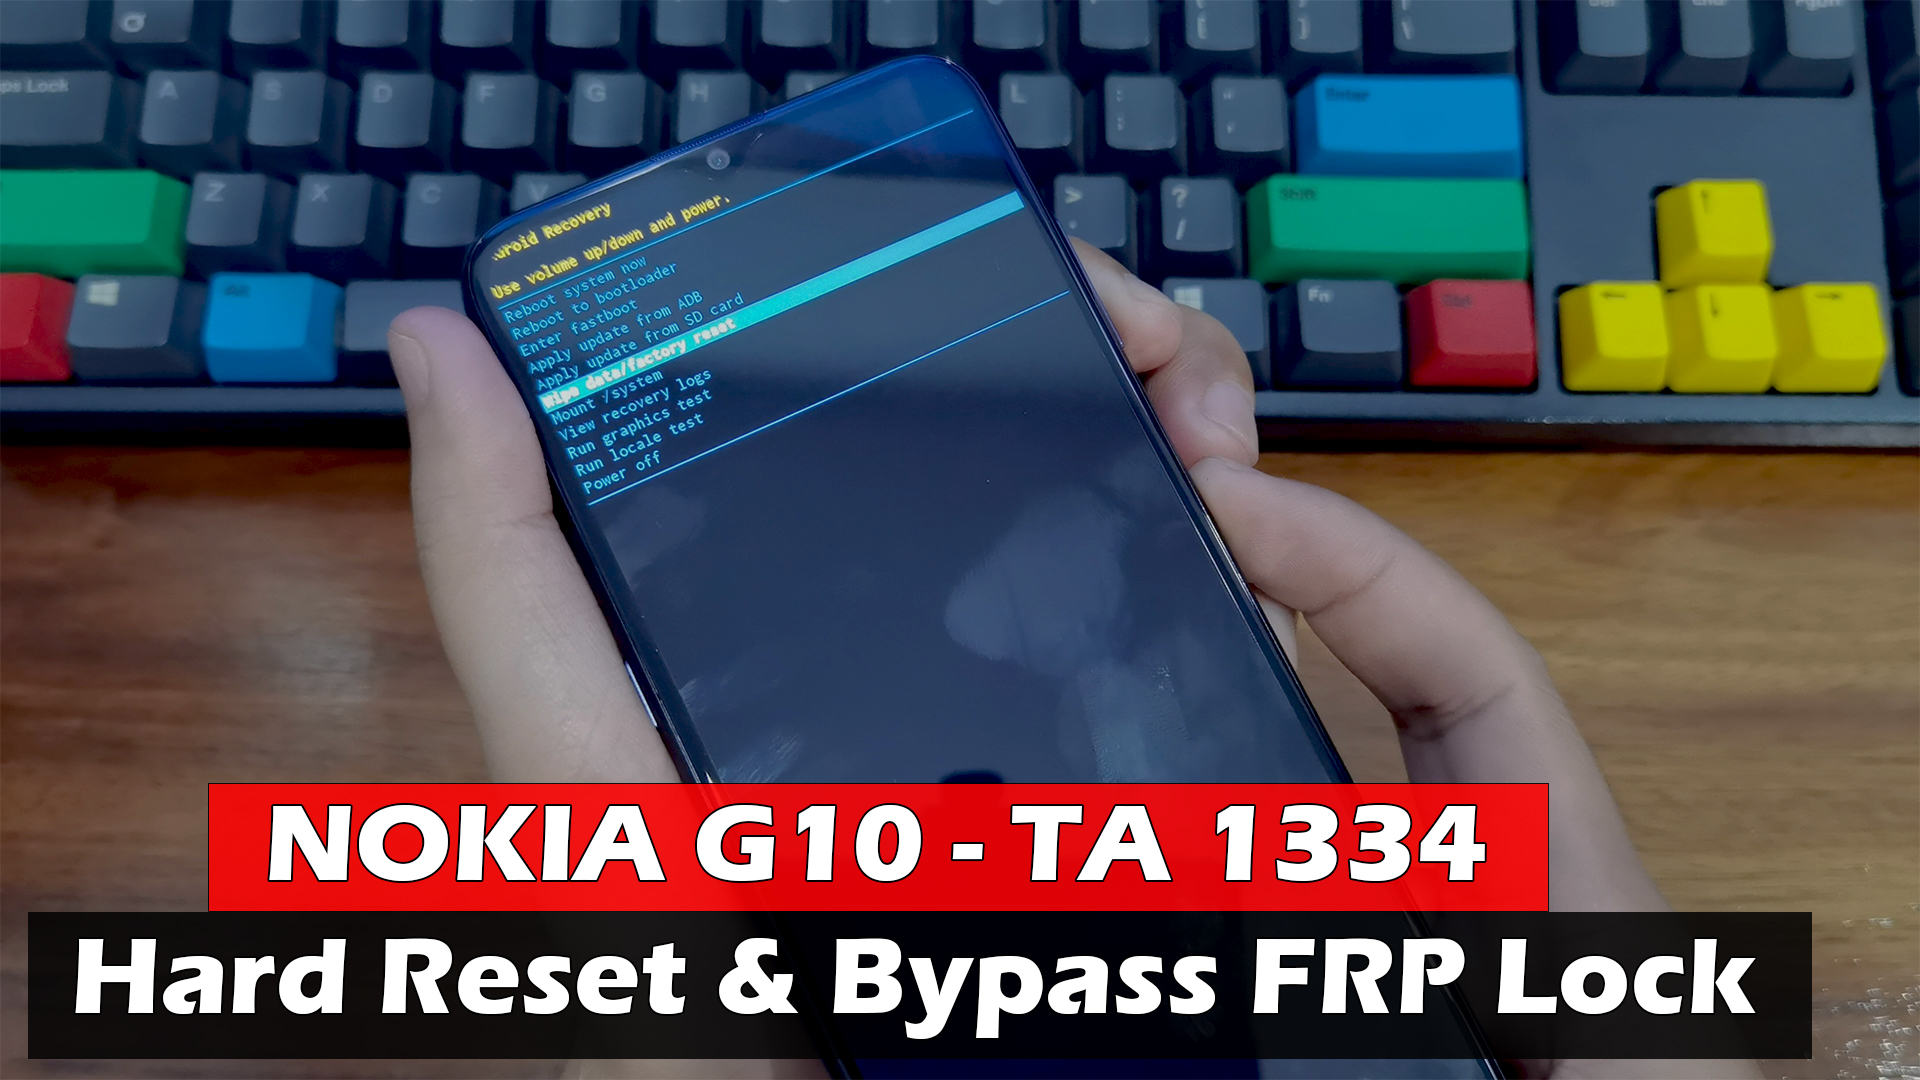 Nokia g10 hard reset unlock tool